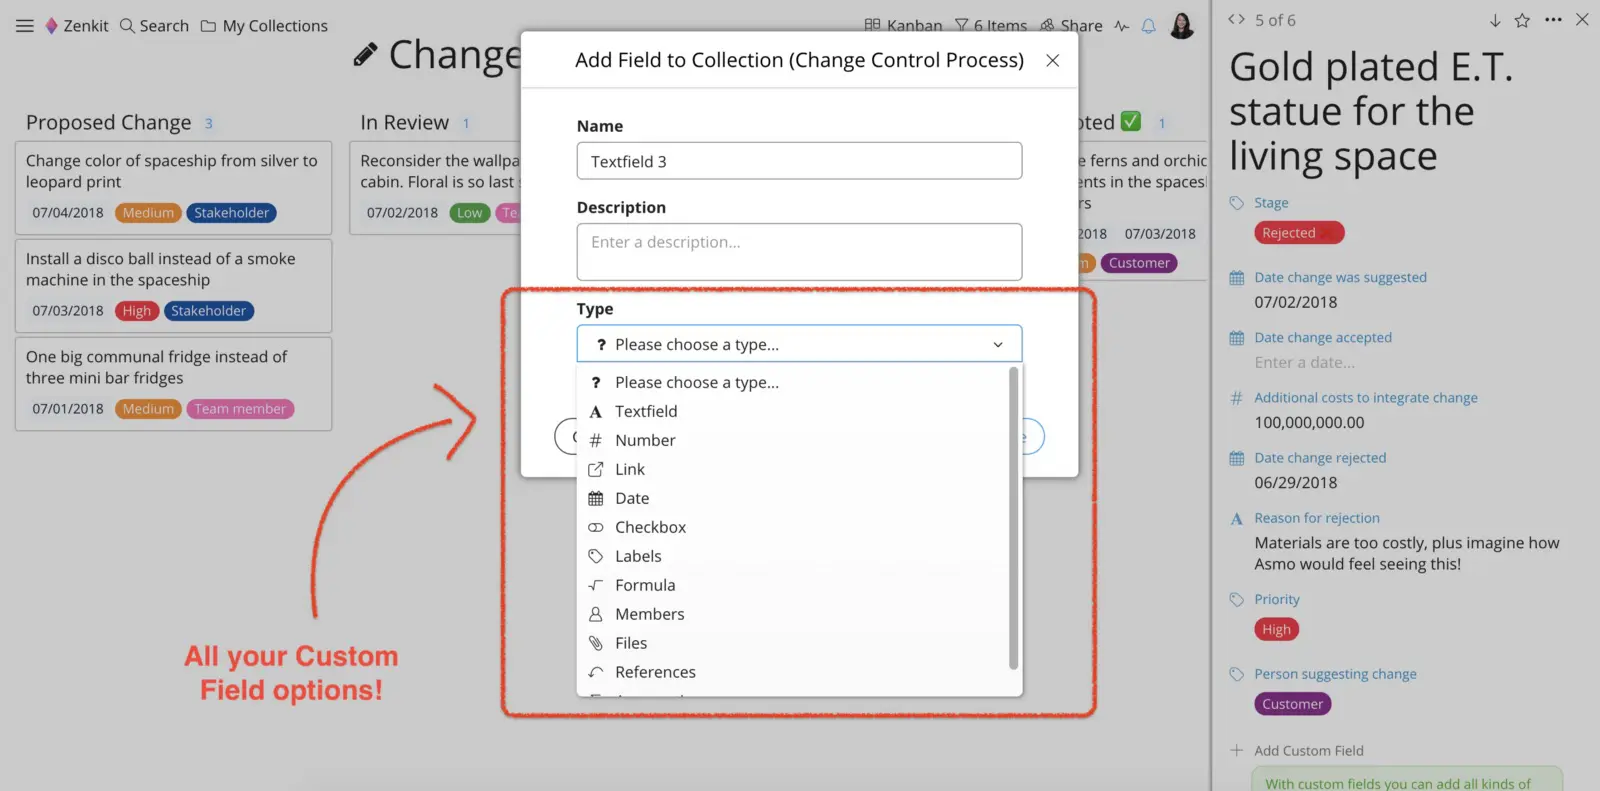 Custom field options in Zenkit change control process